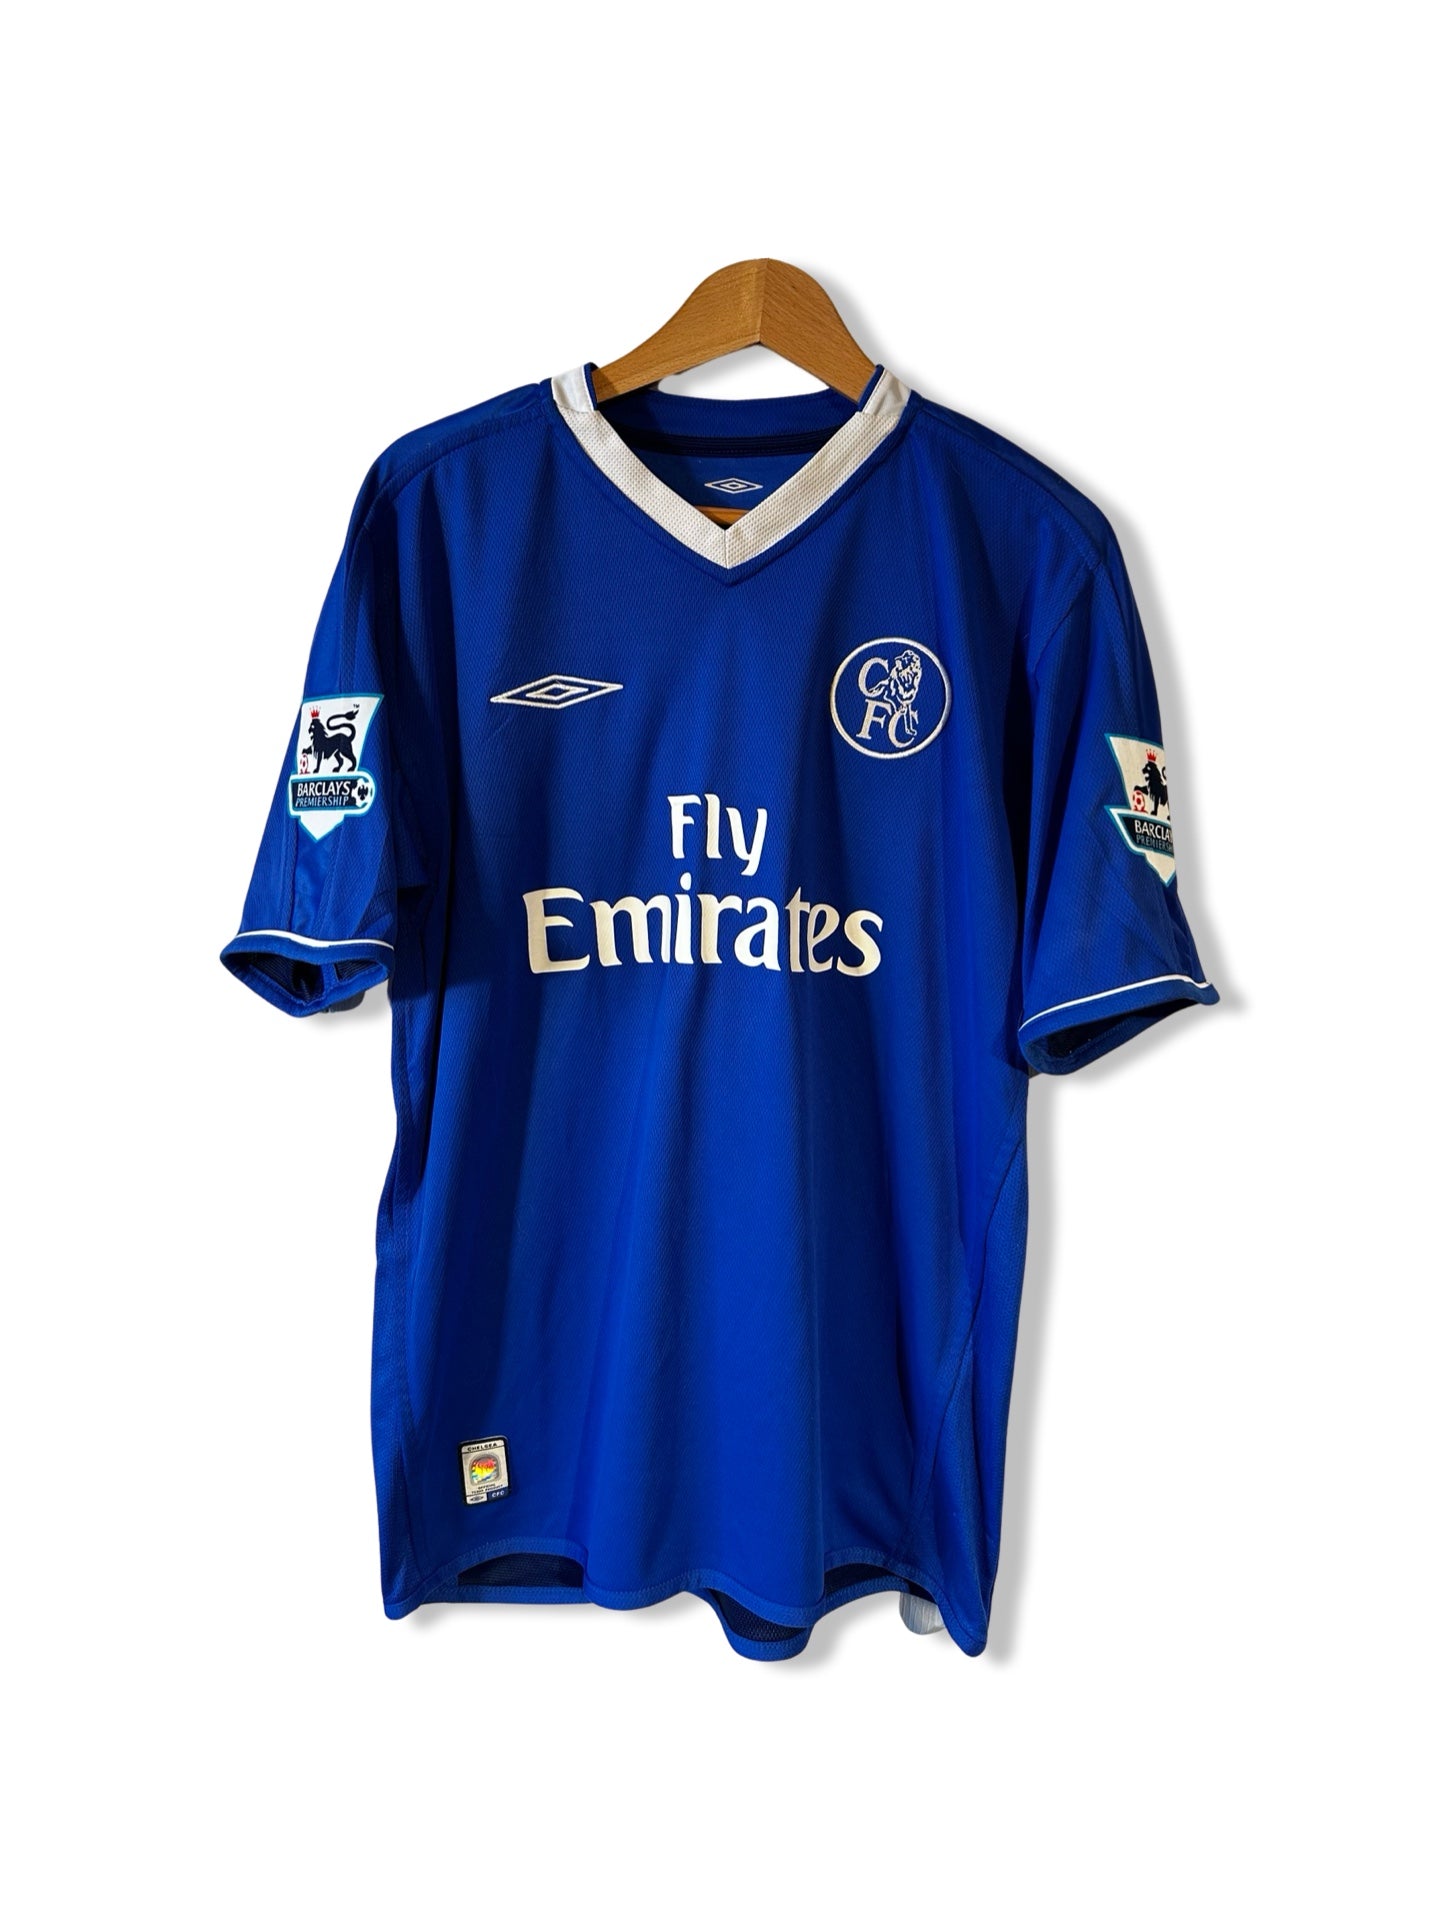 Chelsea FC 2004-05 Home Shirt, #8 Frank Lampard - M